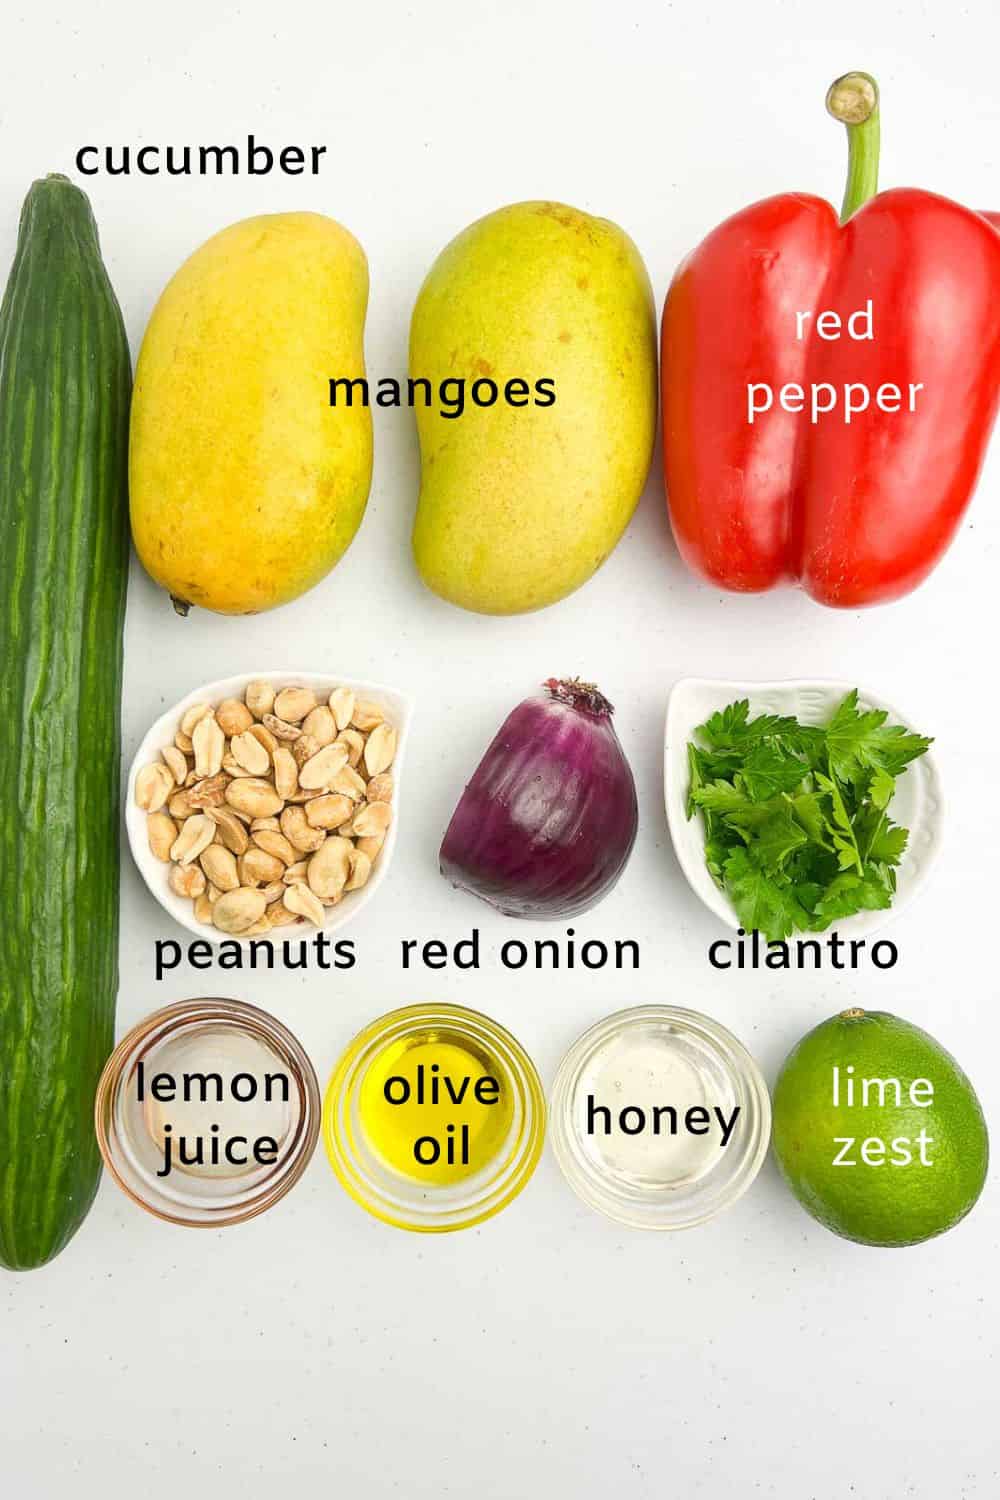 Thai mango salad ingredients with labels.